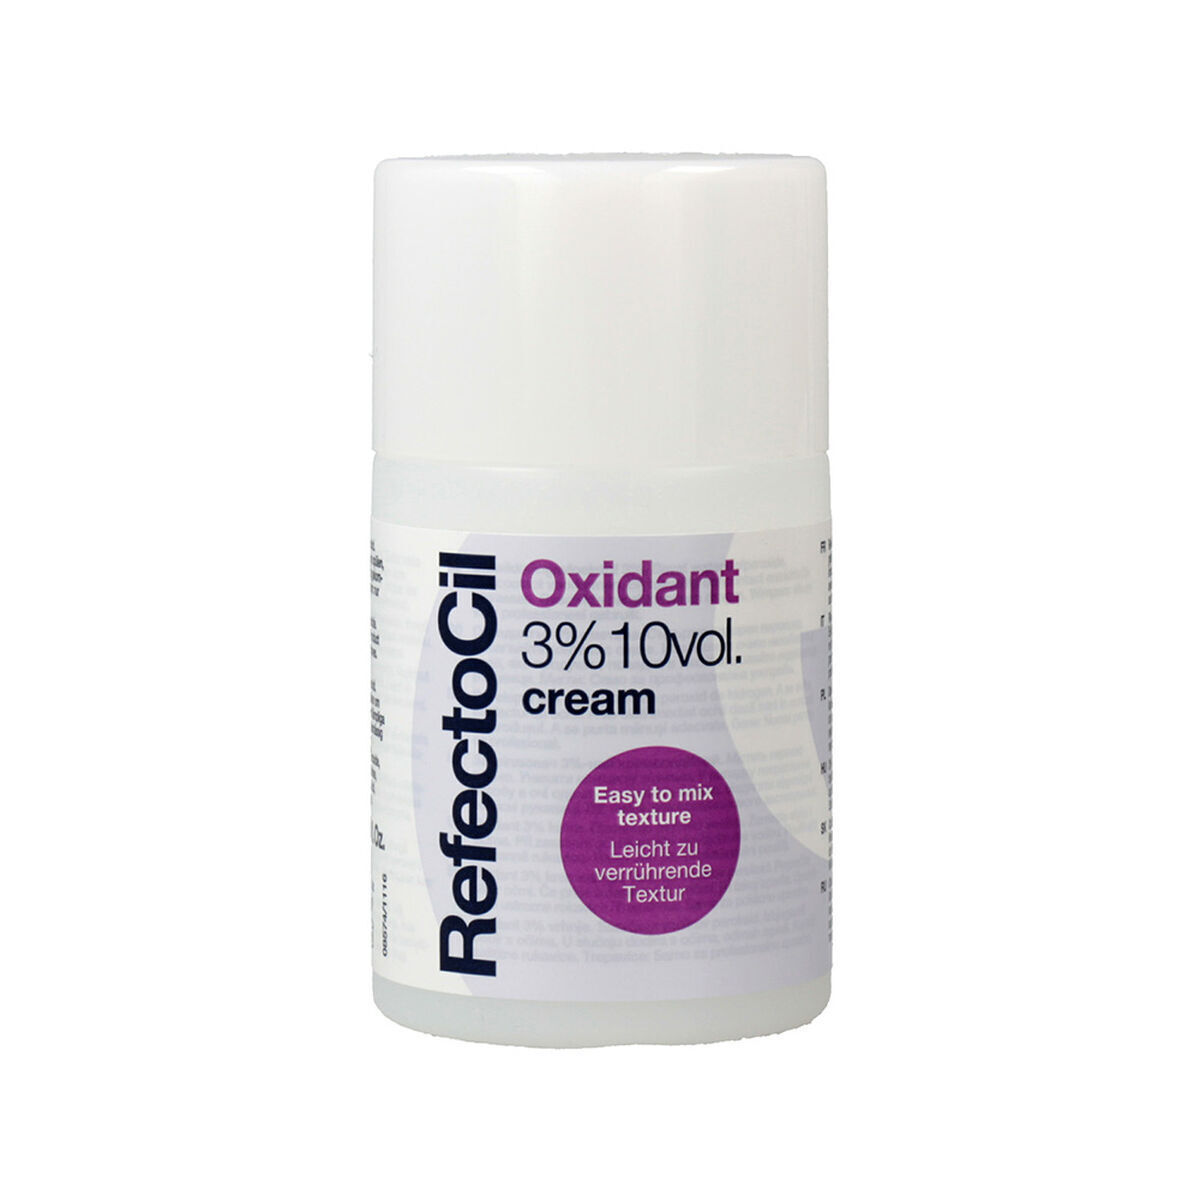 RefectoCil Oxidant 3% 10 Vol Cream Easy to Mix Texture 100ml